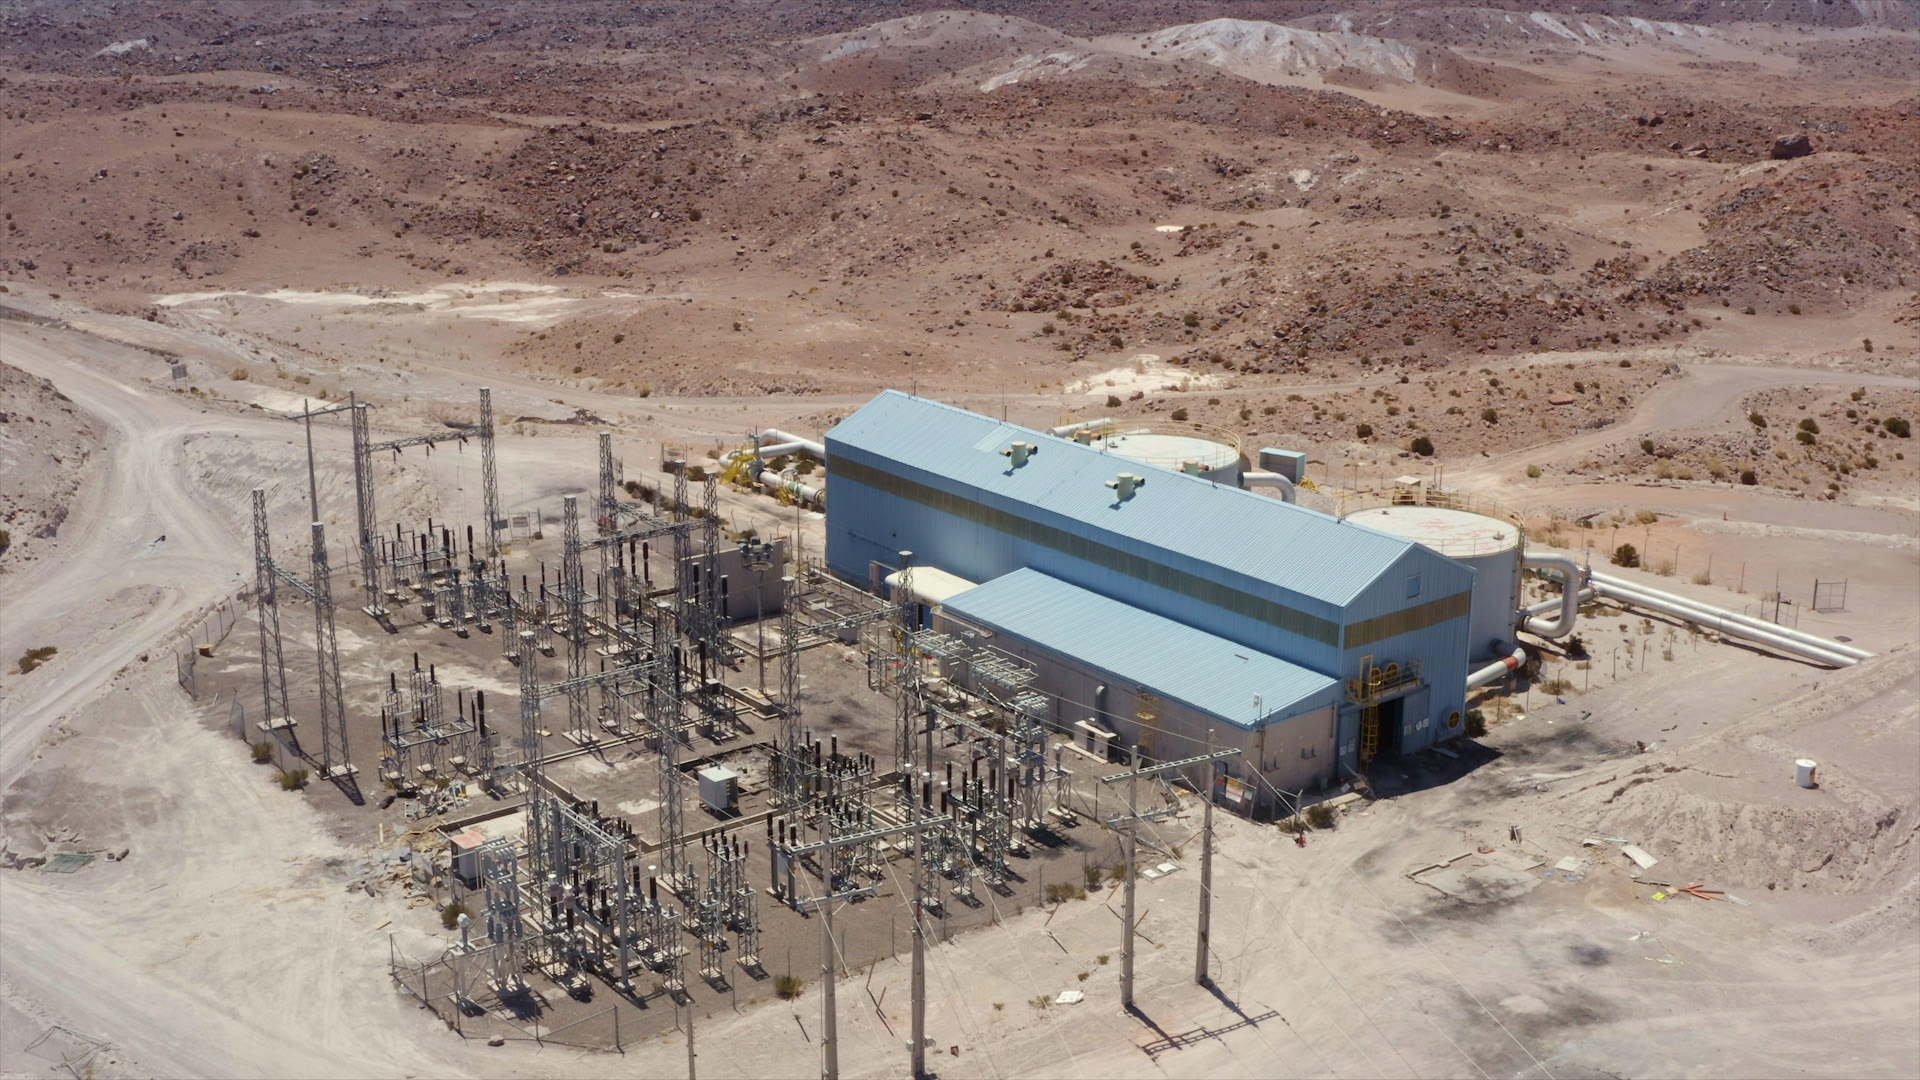 Monturaqui BHP abandoned water wells and electric plant, Atacama Desert